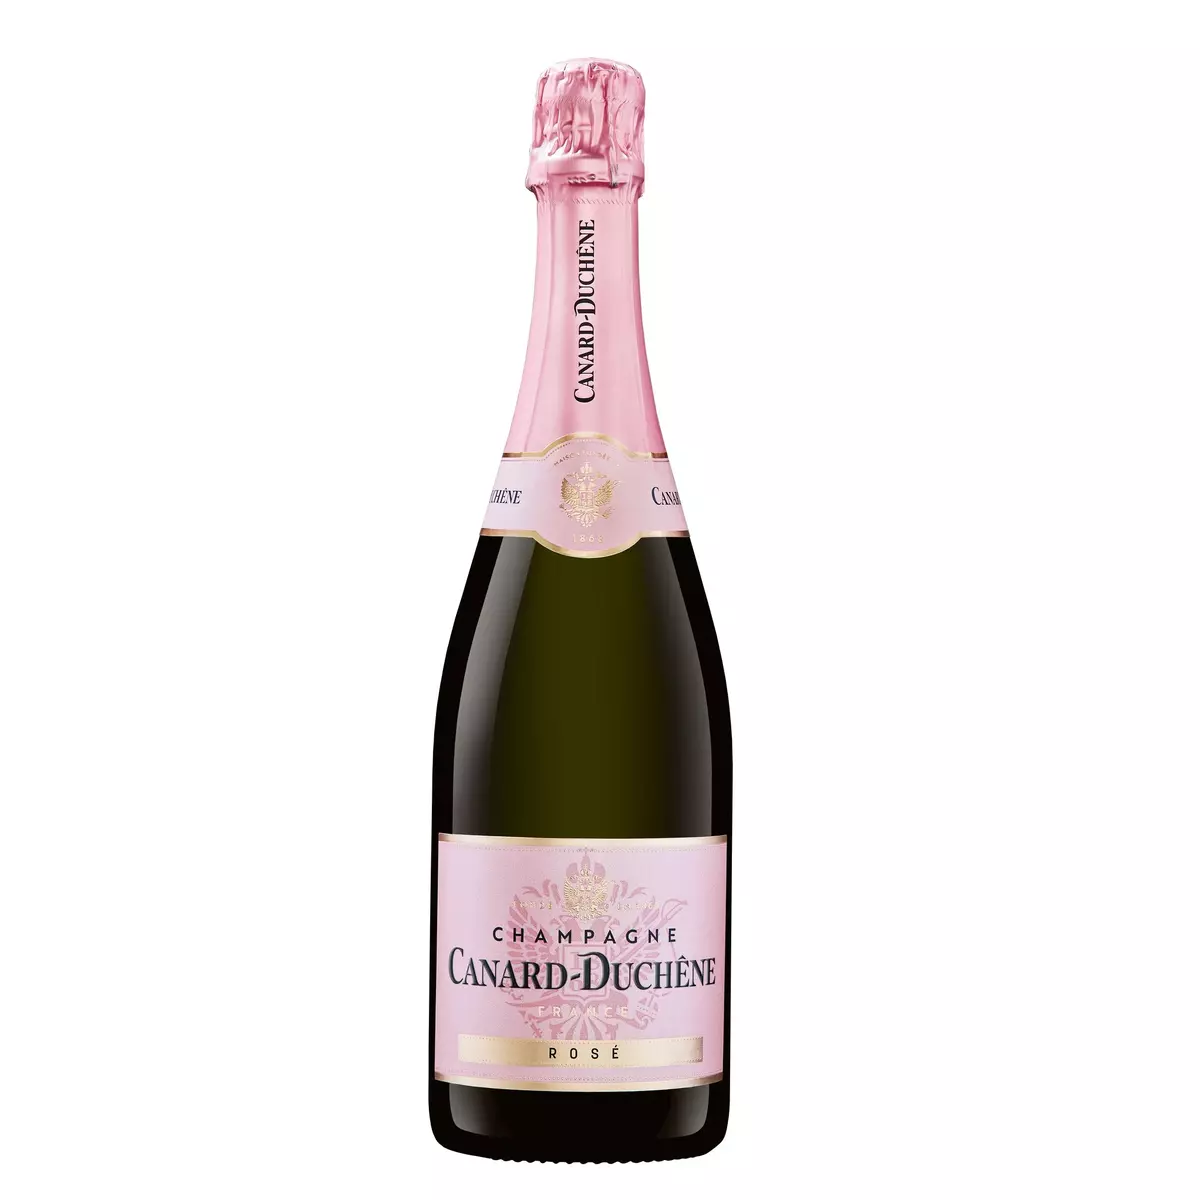 CANARD DUCHENE AOP Champagne rosé 75cl